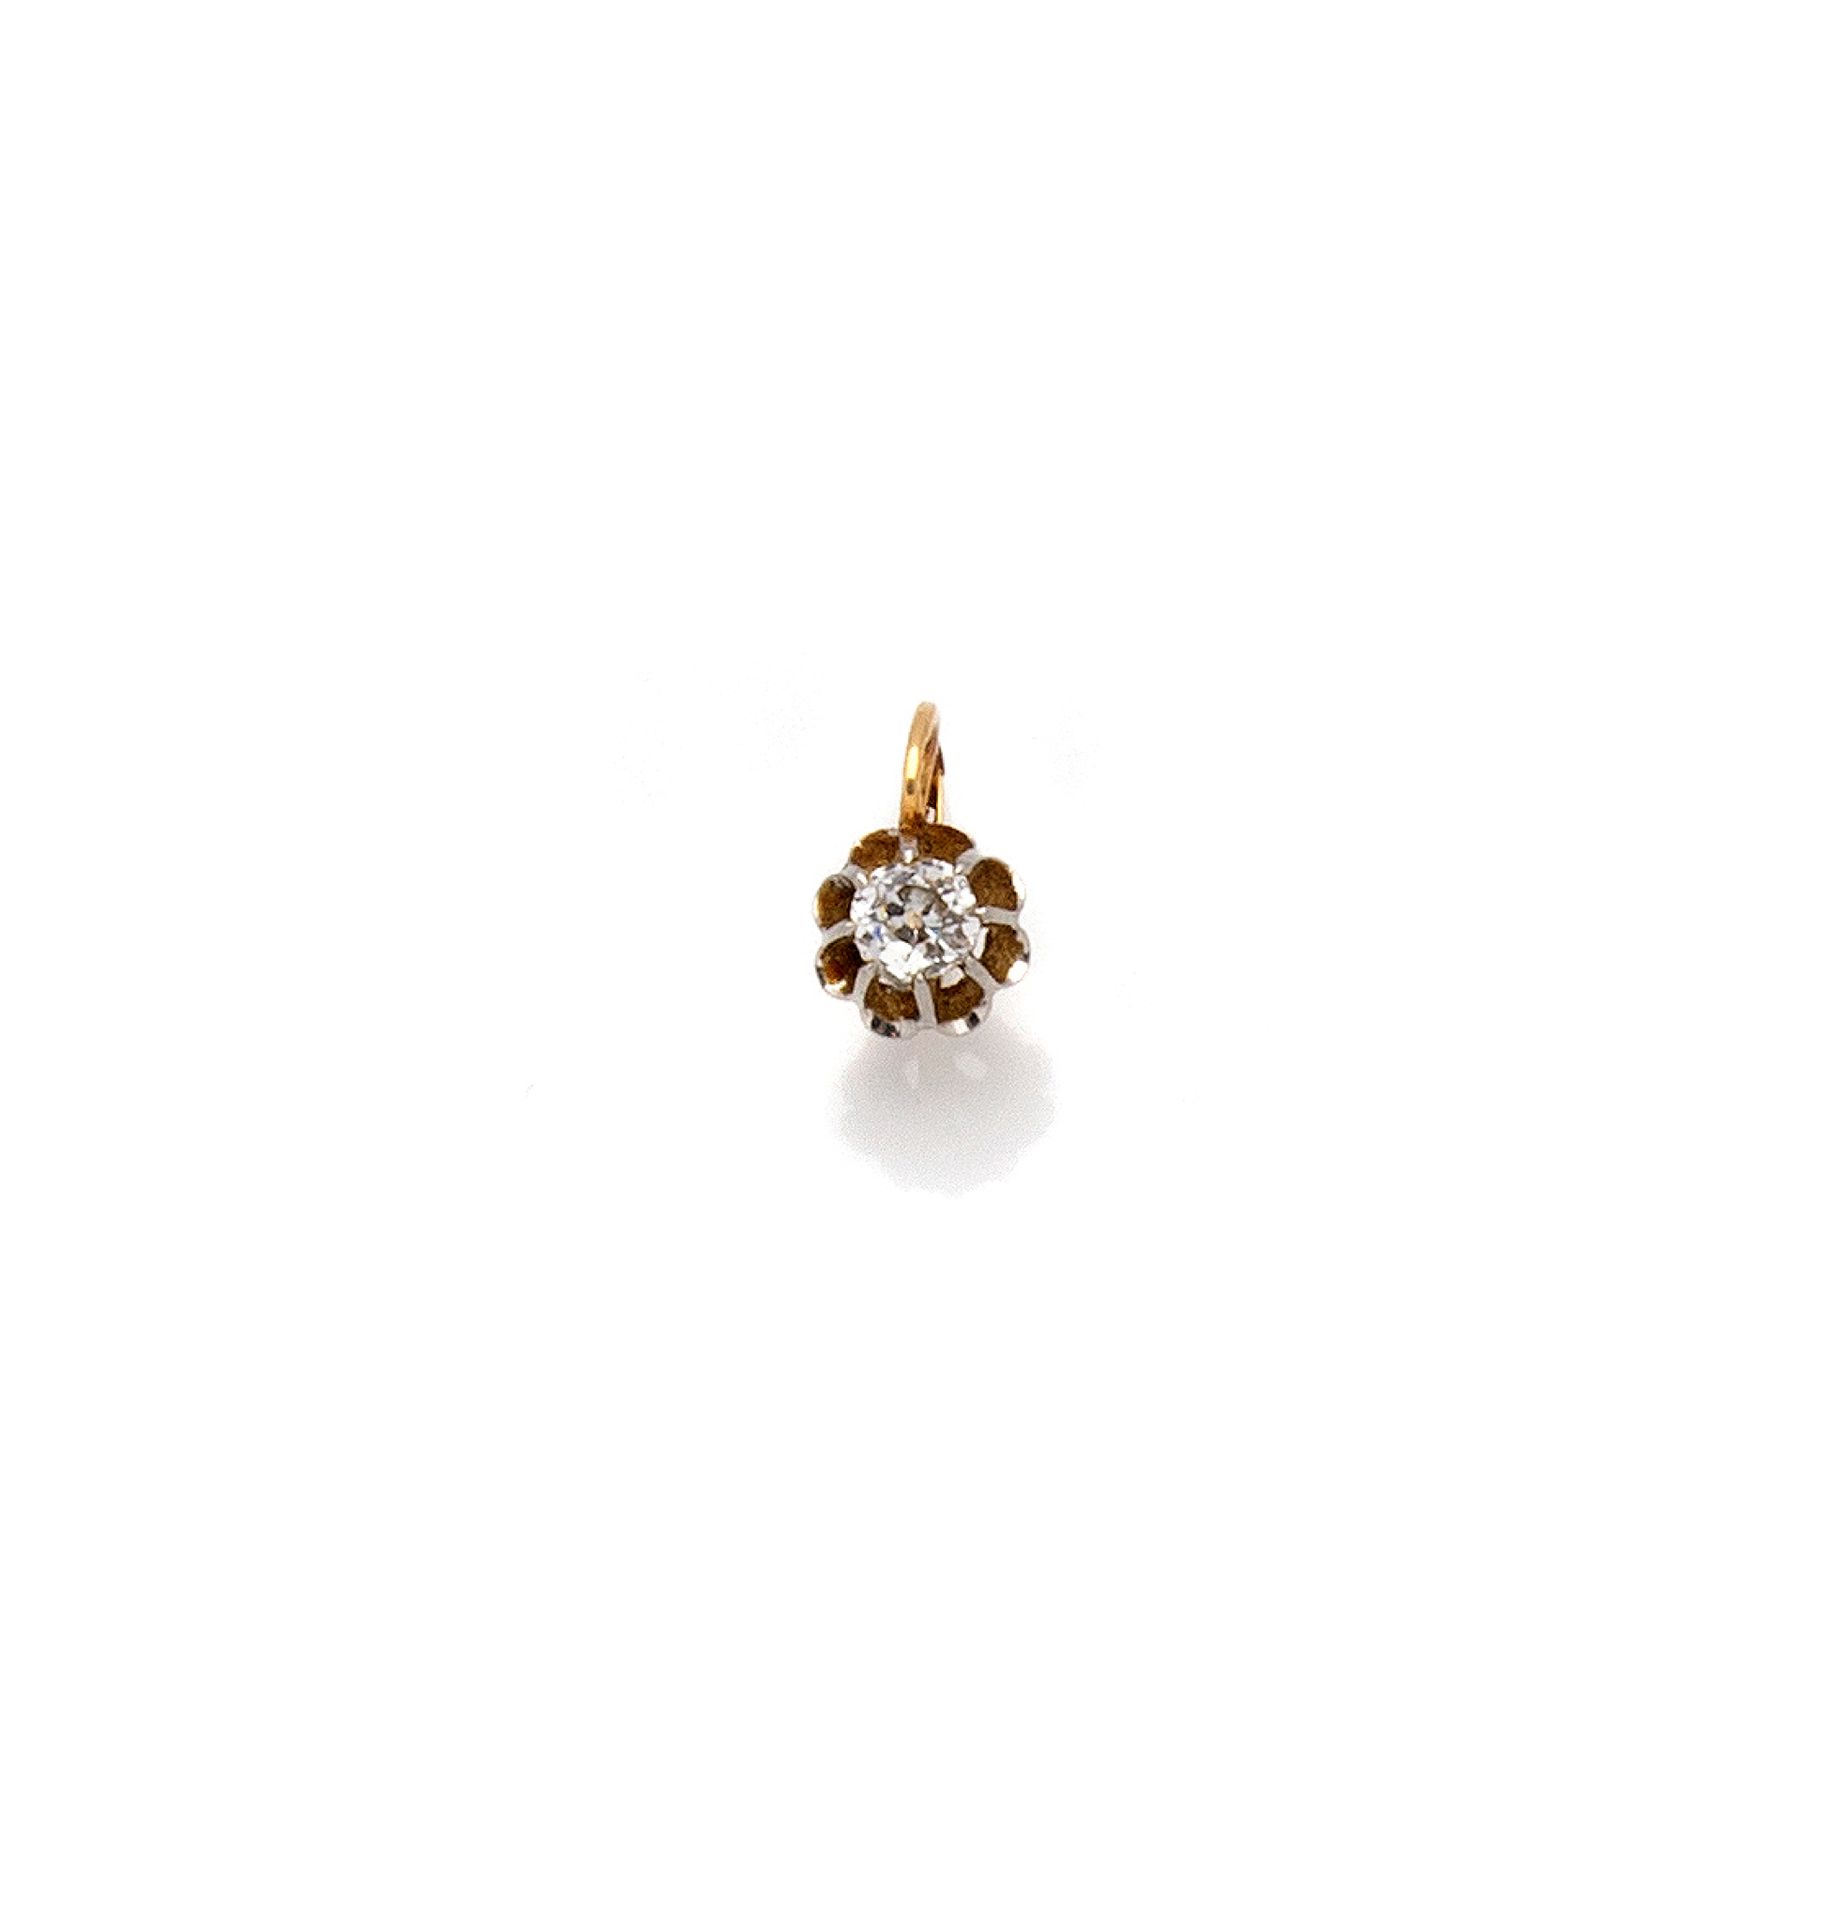 Null 18K(750/1000)黄金和铂金(850/1000)耳环，在幻彩边框中镶嵌一颗老式切割钻石。沉睡的片段。

钻石尺寸：5.11 x 5.32 x &hellip;